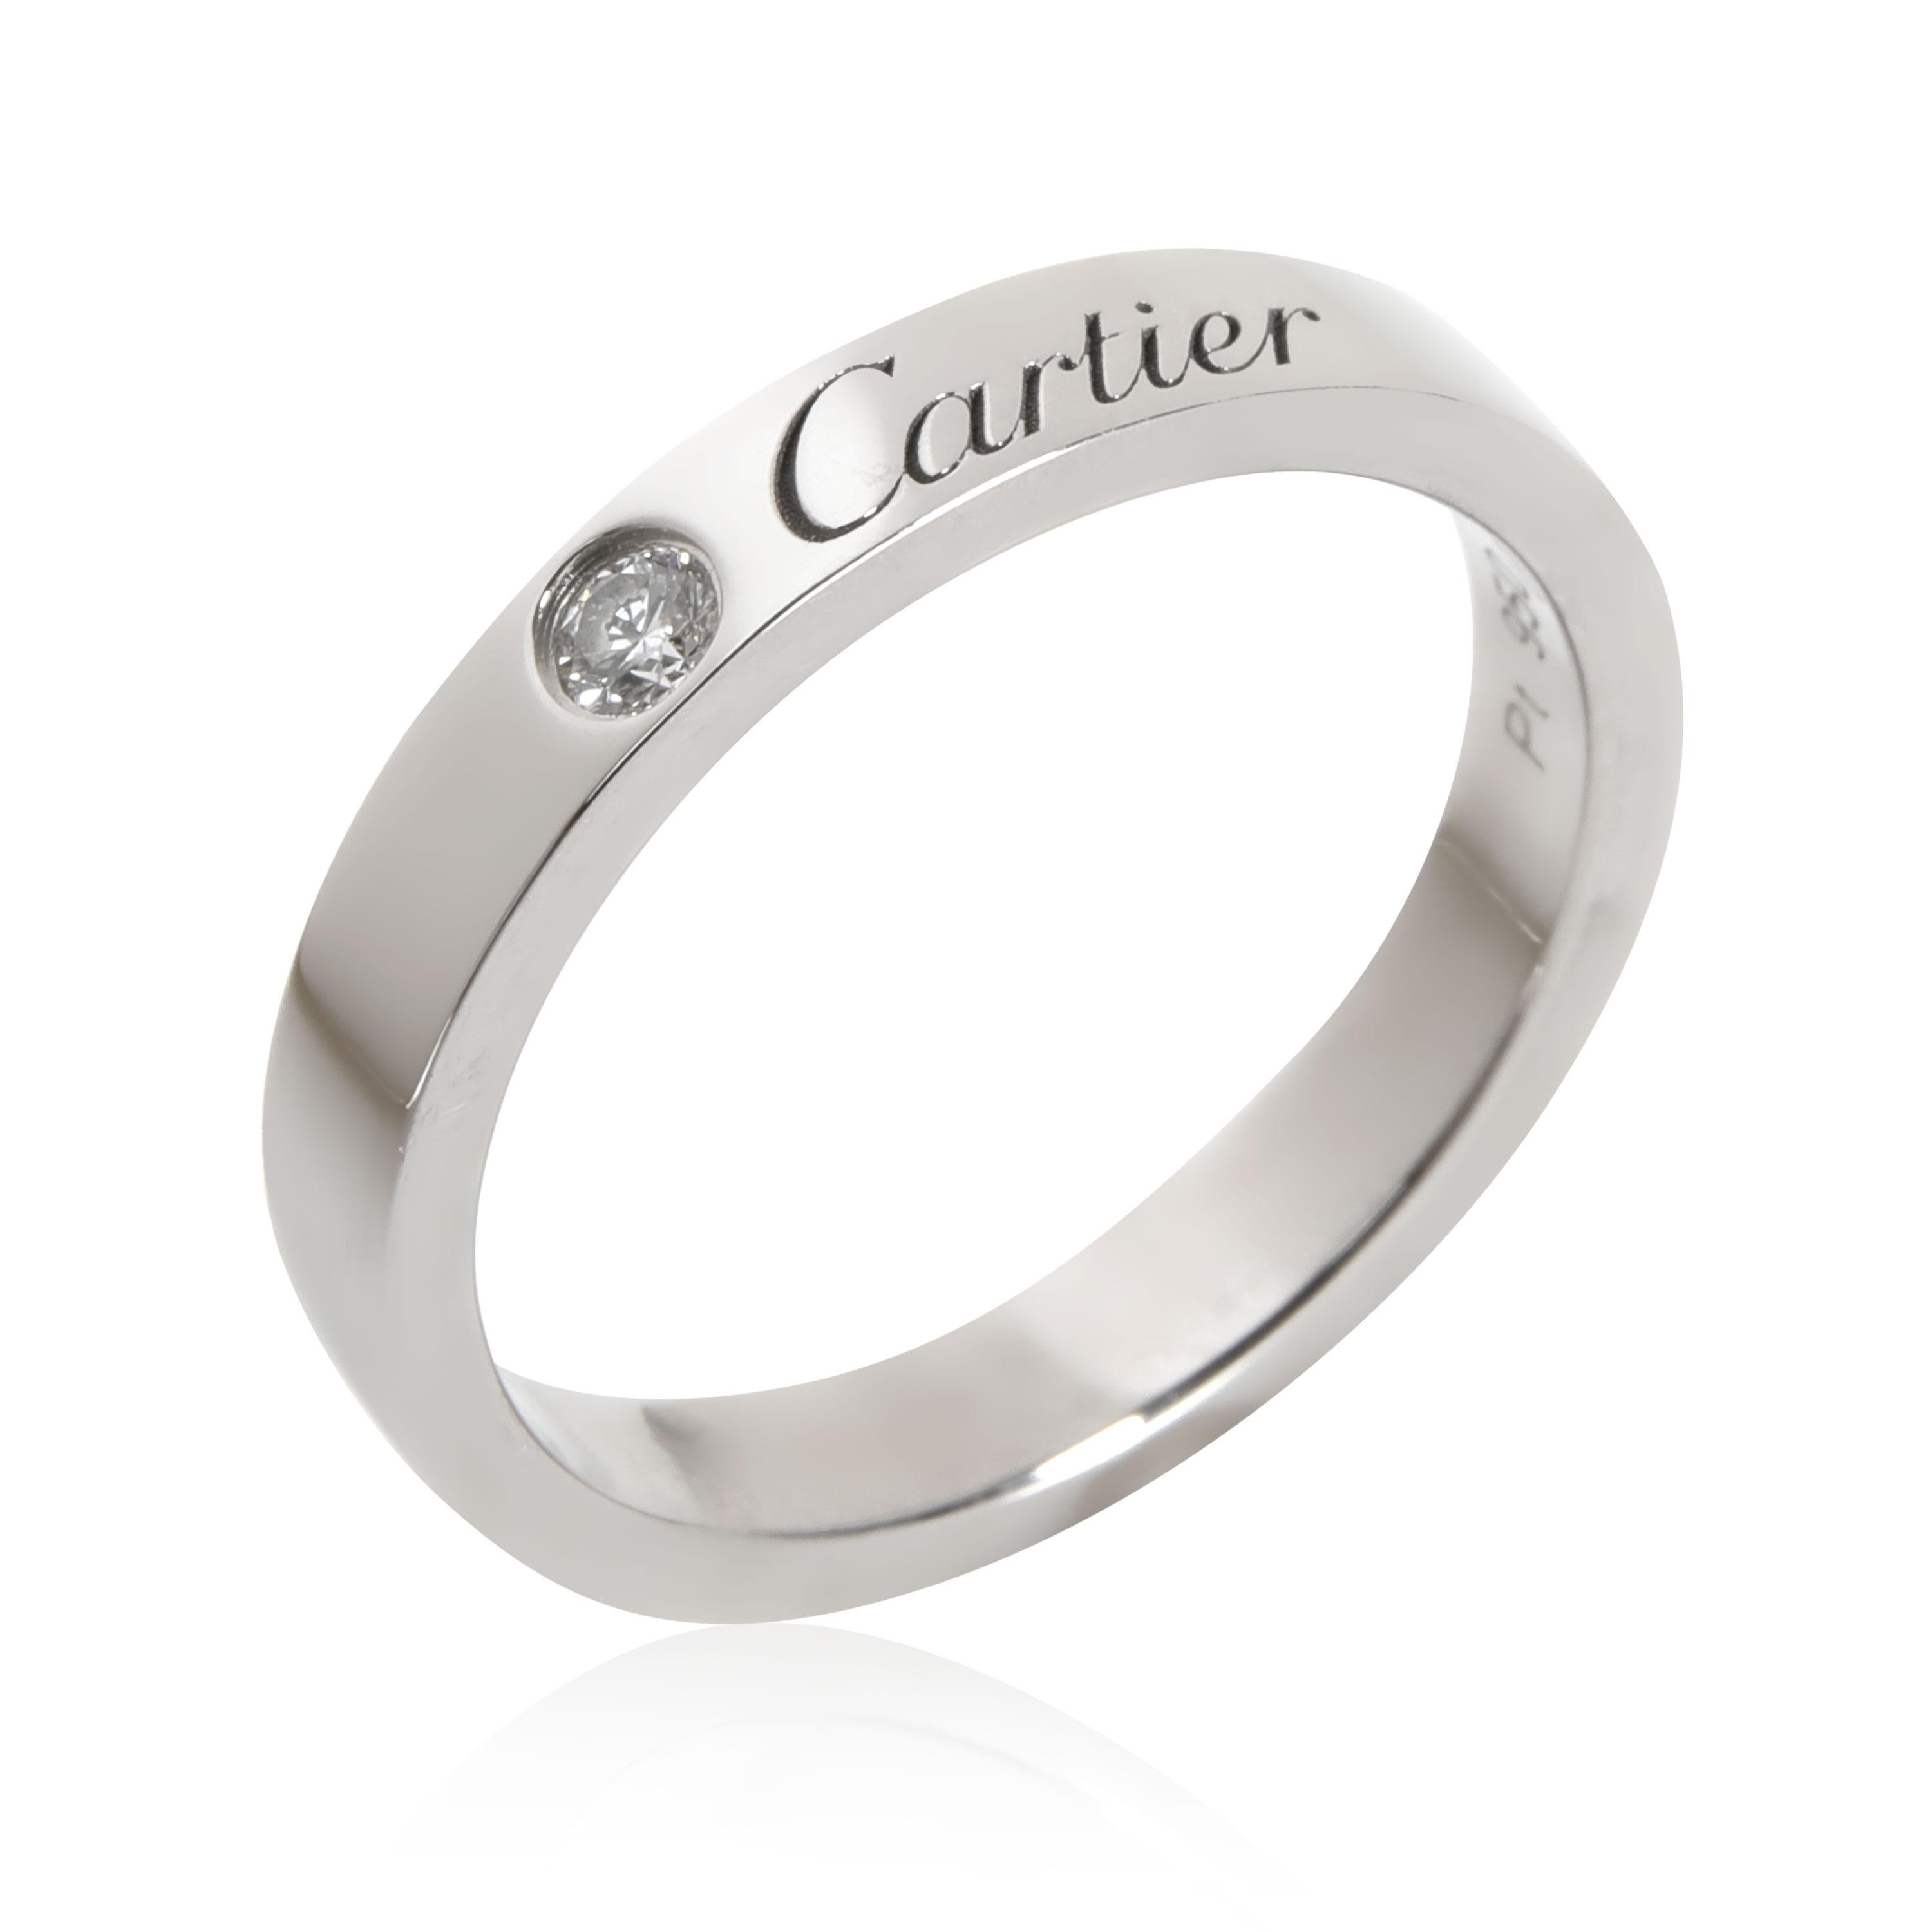 Cartier C de Cartier Diamond Wedding Band in Platinum 0.03 CTW For Sale ...